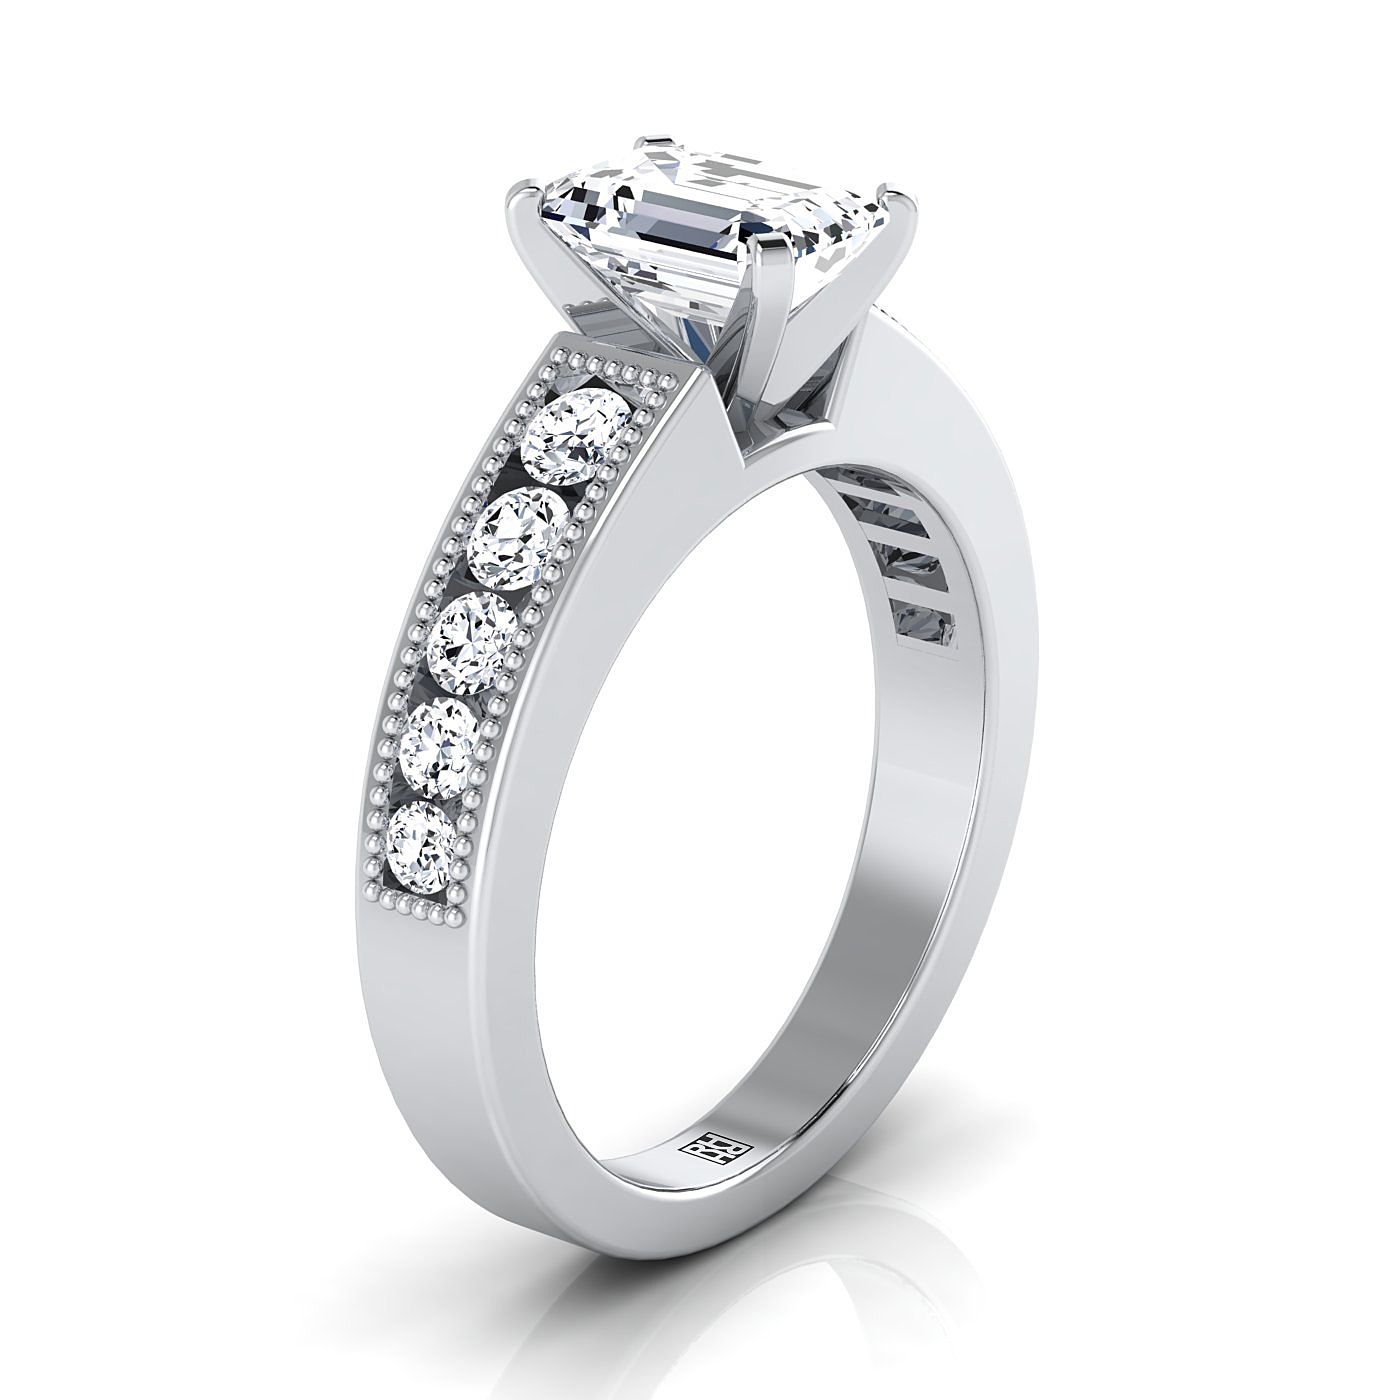 14K White Gold Emerald Cut Diamond Antique Milgrain Bead and Channel Set Engagement Ring -1/2ctw